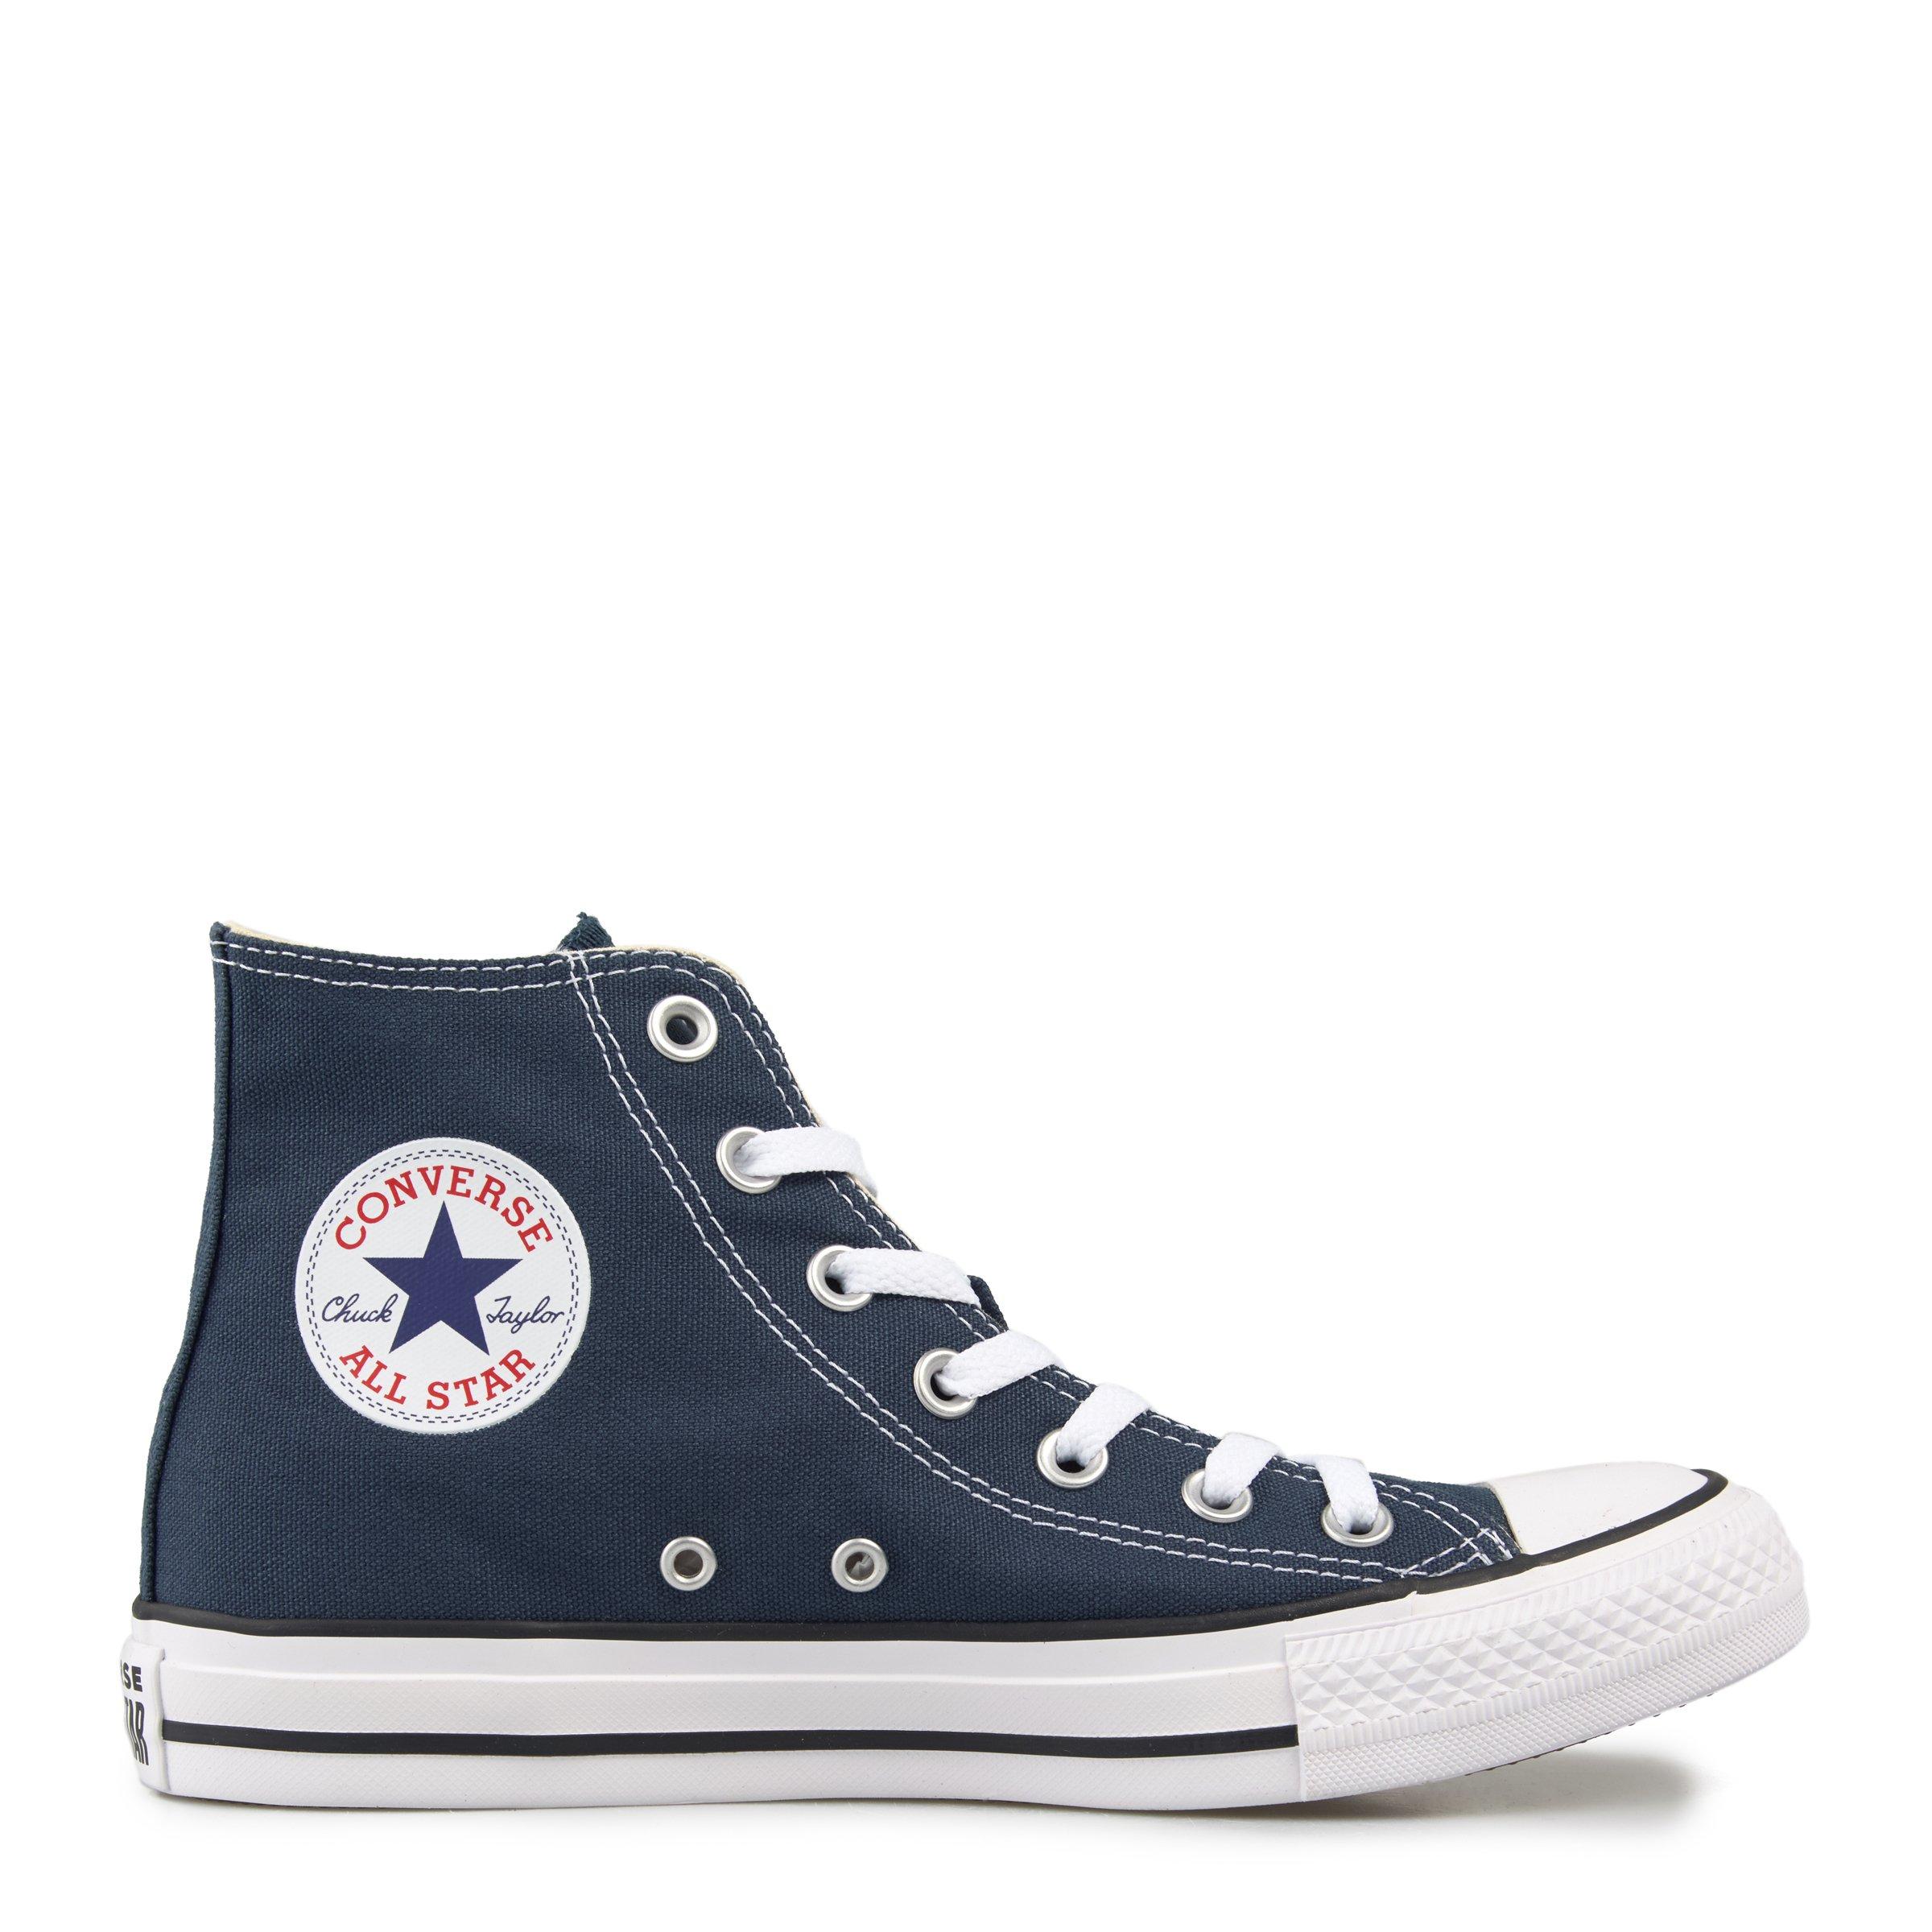 Buy Converse All Star Hi Sneakers Online | Office London